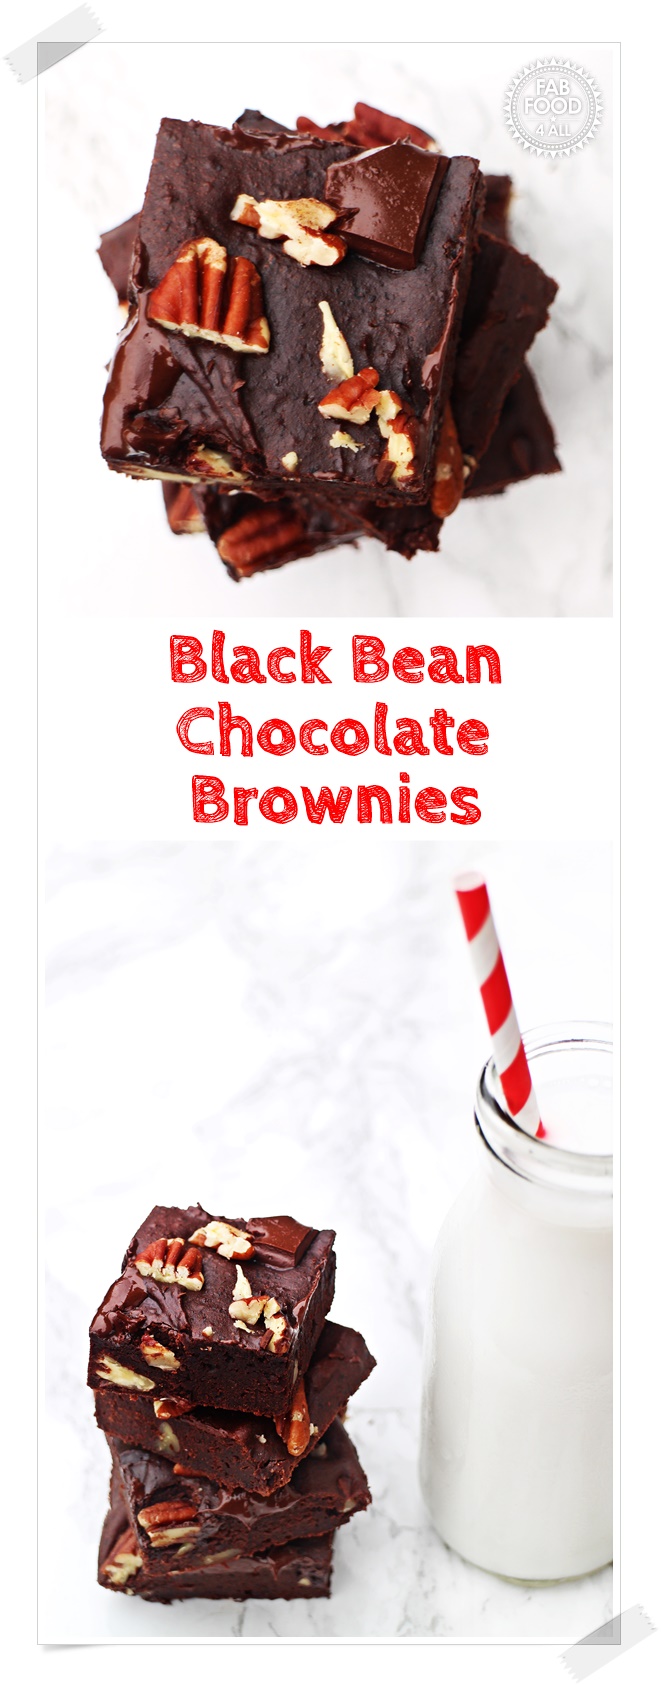 Black Bean Chocolate Brownies from veggie desserts + cakes - Fab Food 4 All #veggiedesserts #brownies #chocolate #blackbean #vegetarian